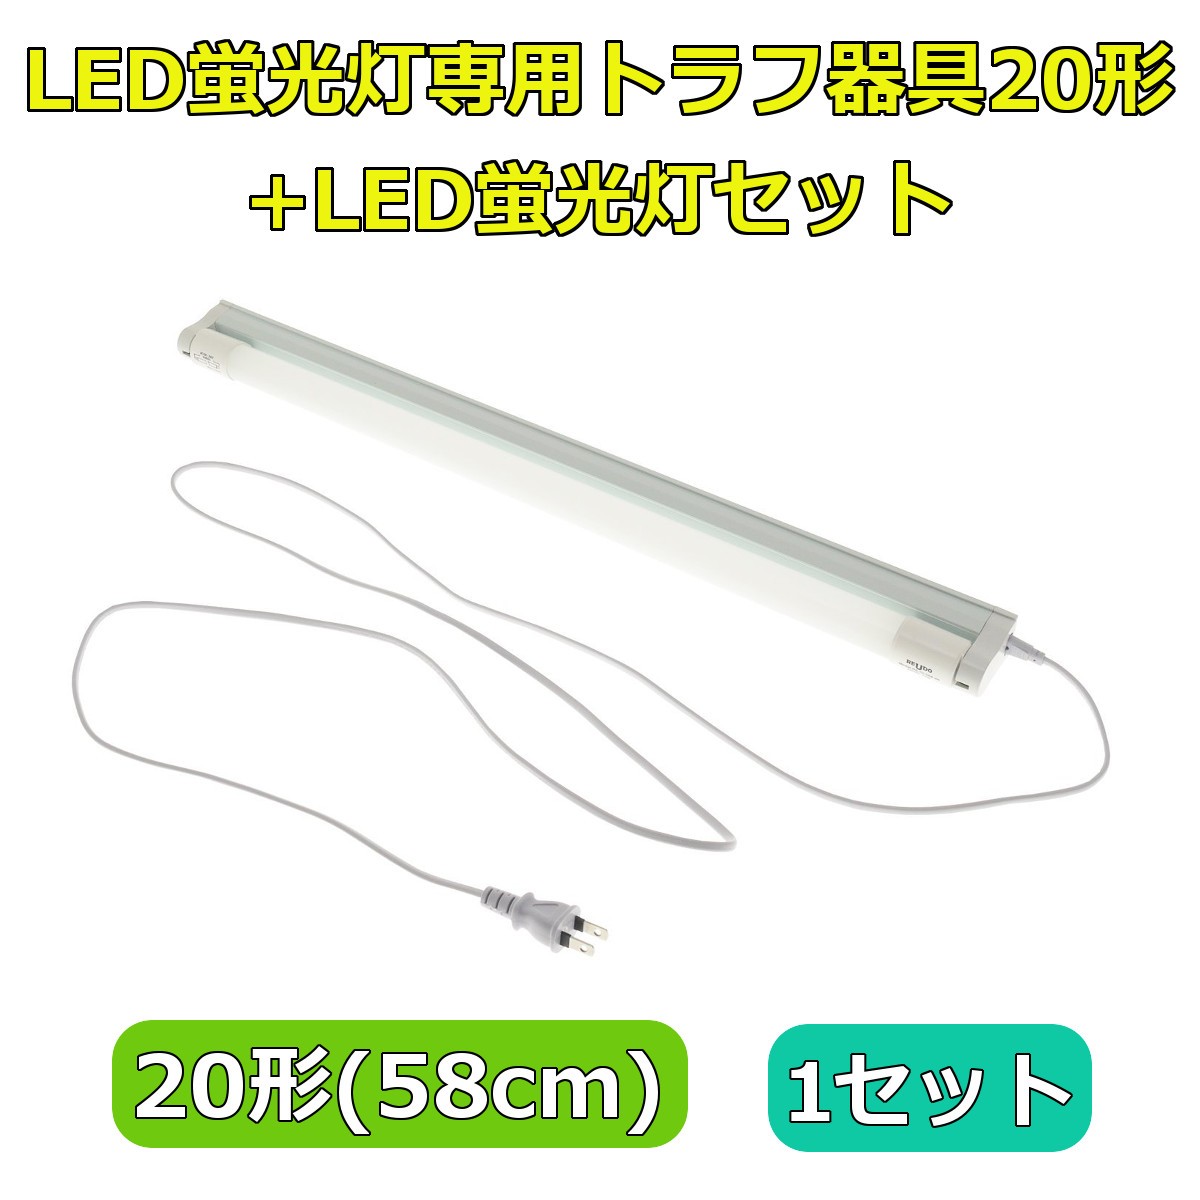 LED蛍光灯 スイッチ付 器具一体型 長さ117cm 昼光色 2180ルーメン 消費